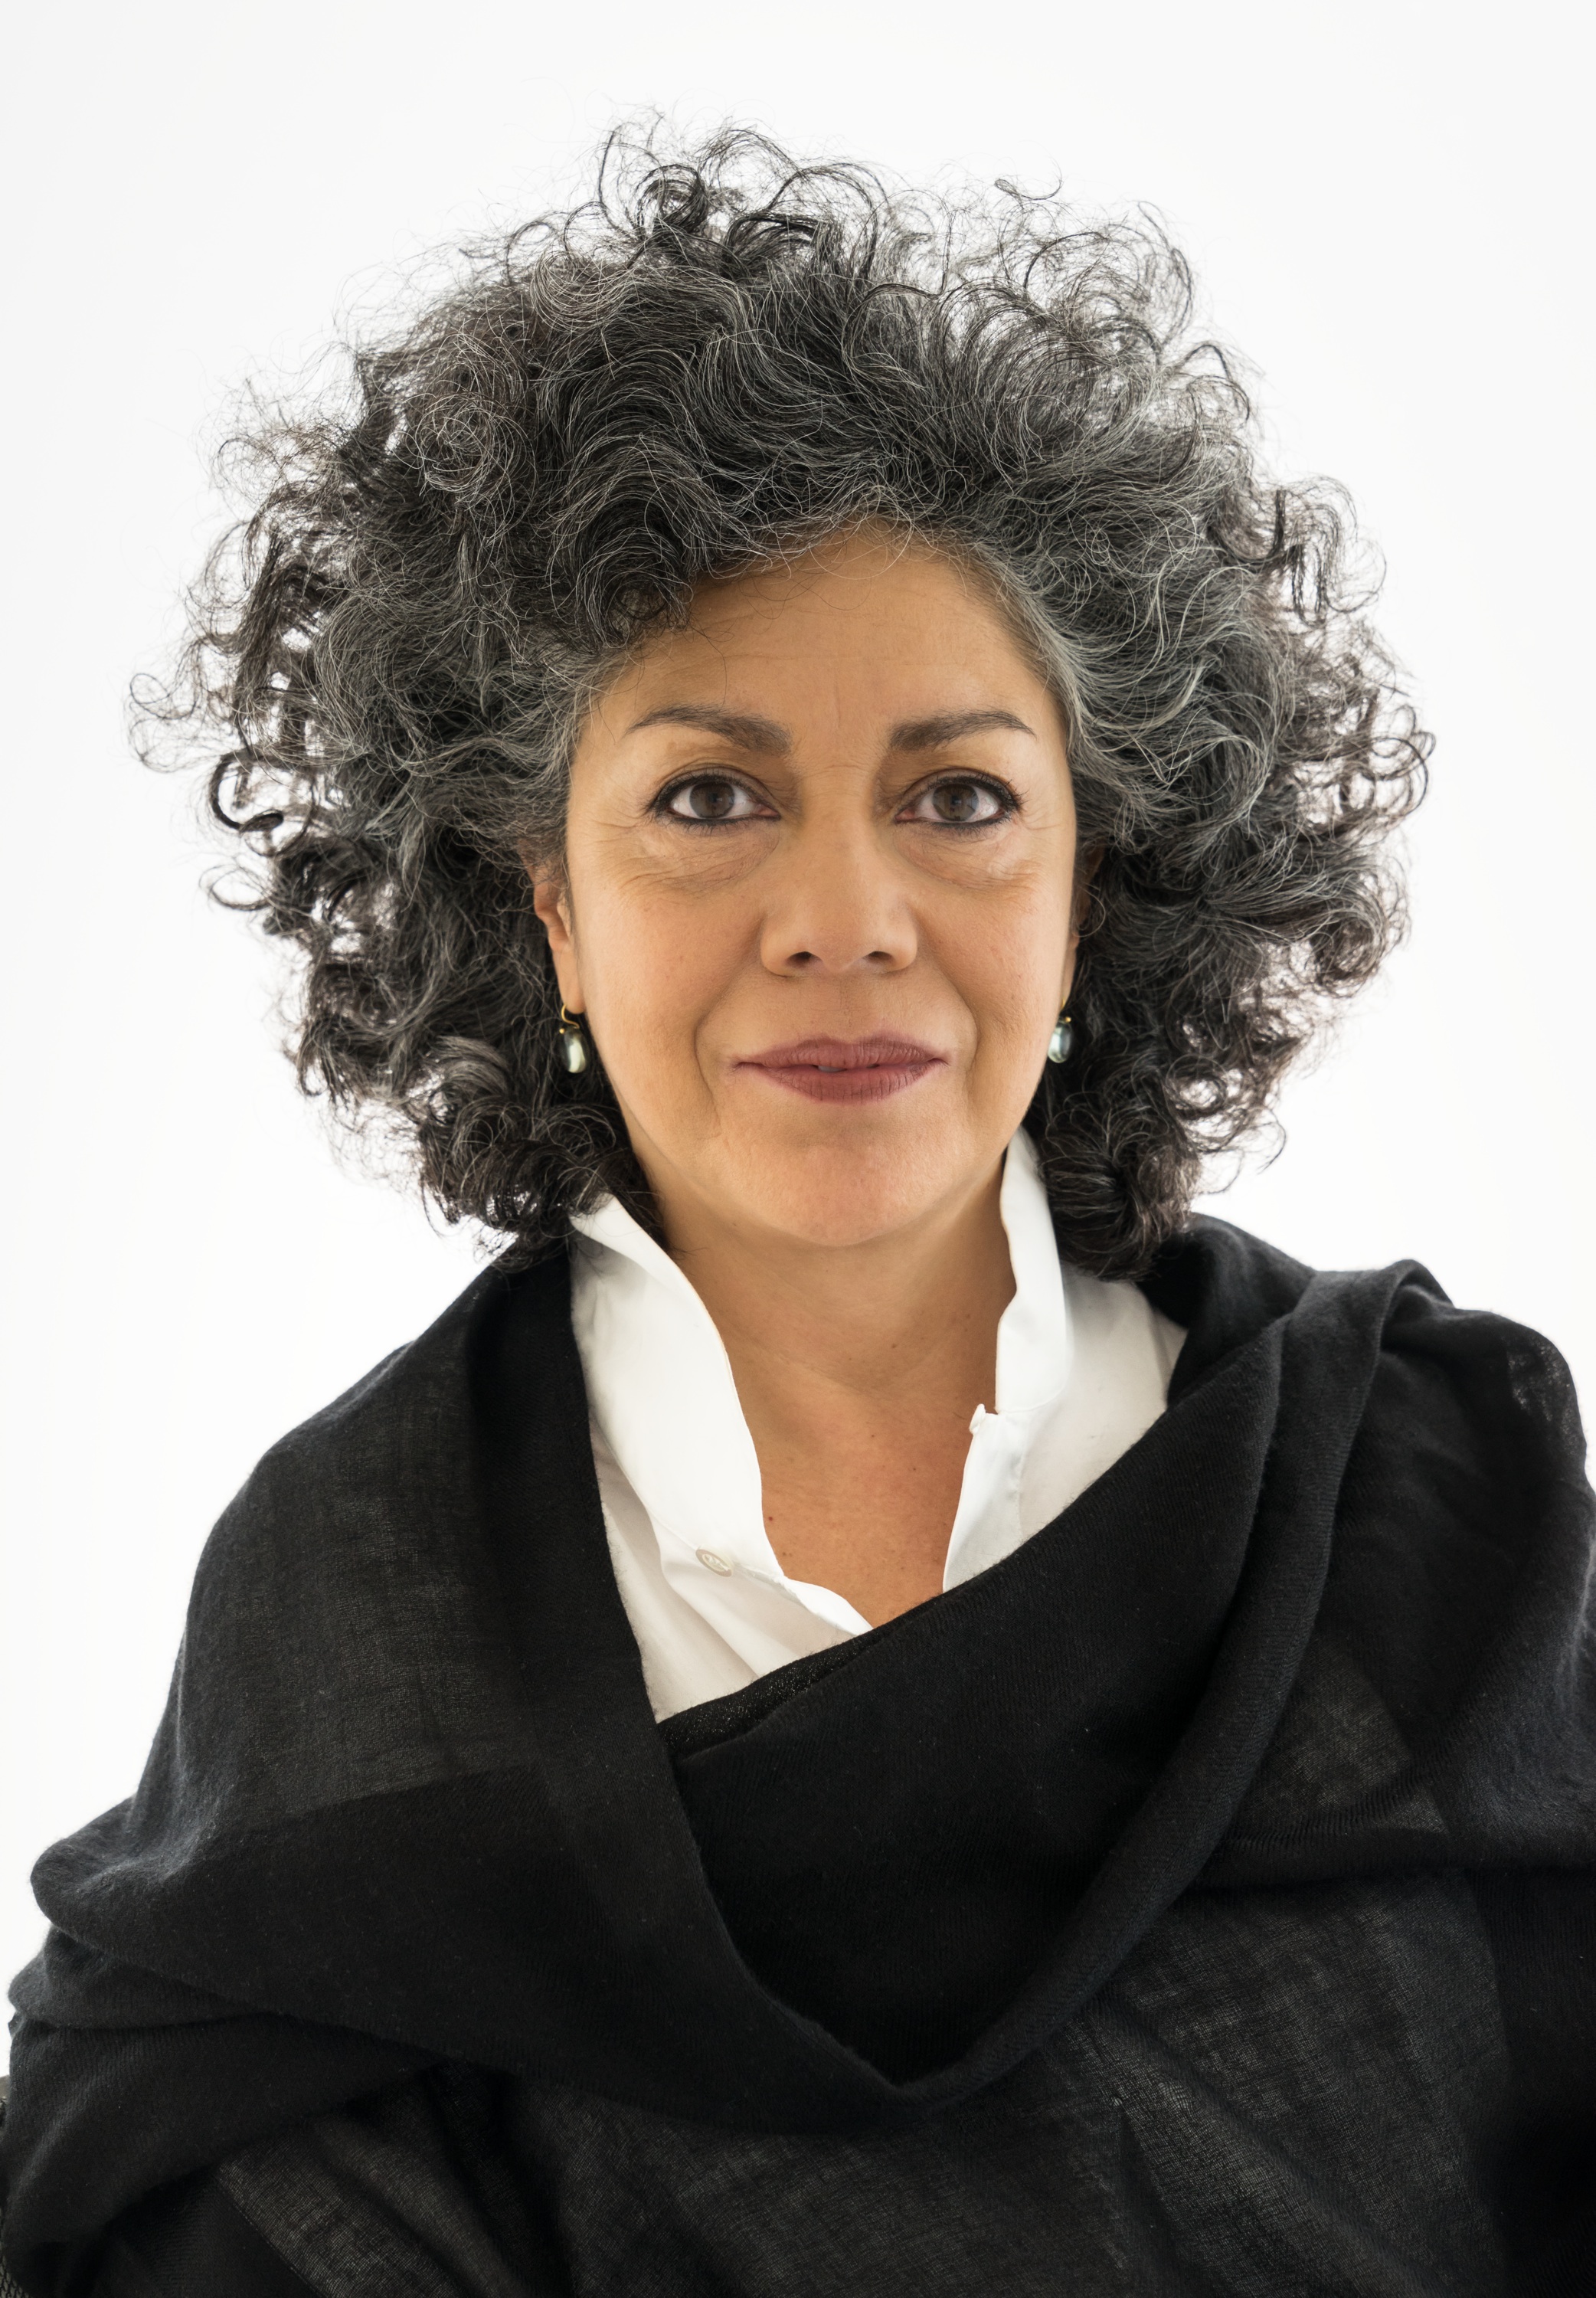 Doris Salcedo - Wikipedia, la enciclopedia libre